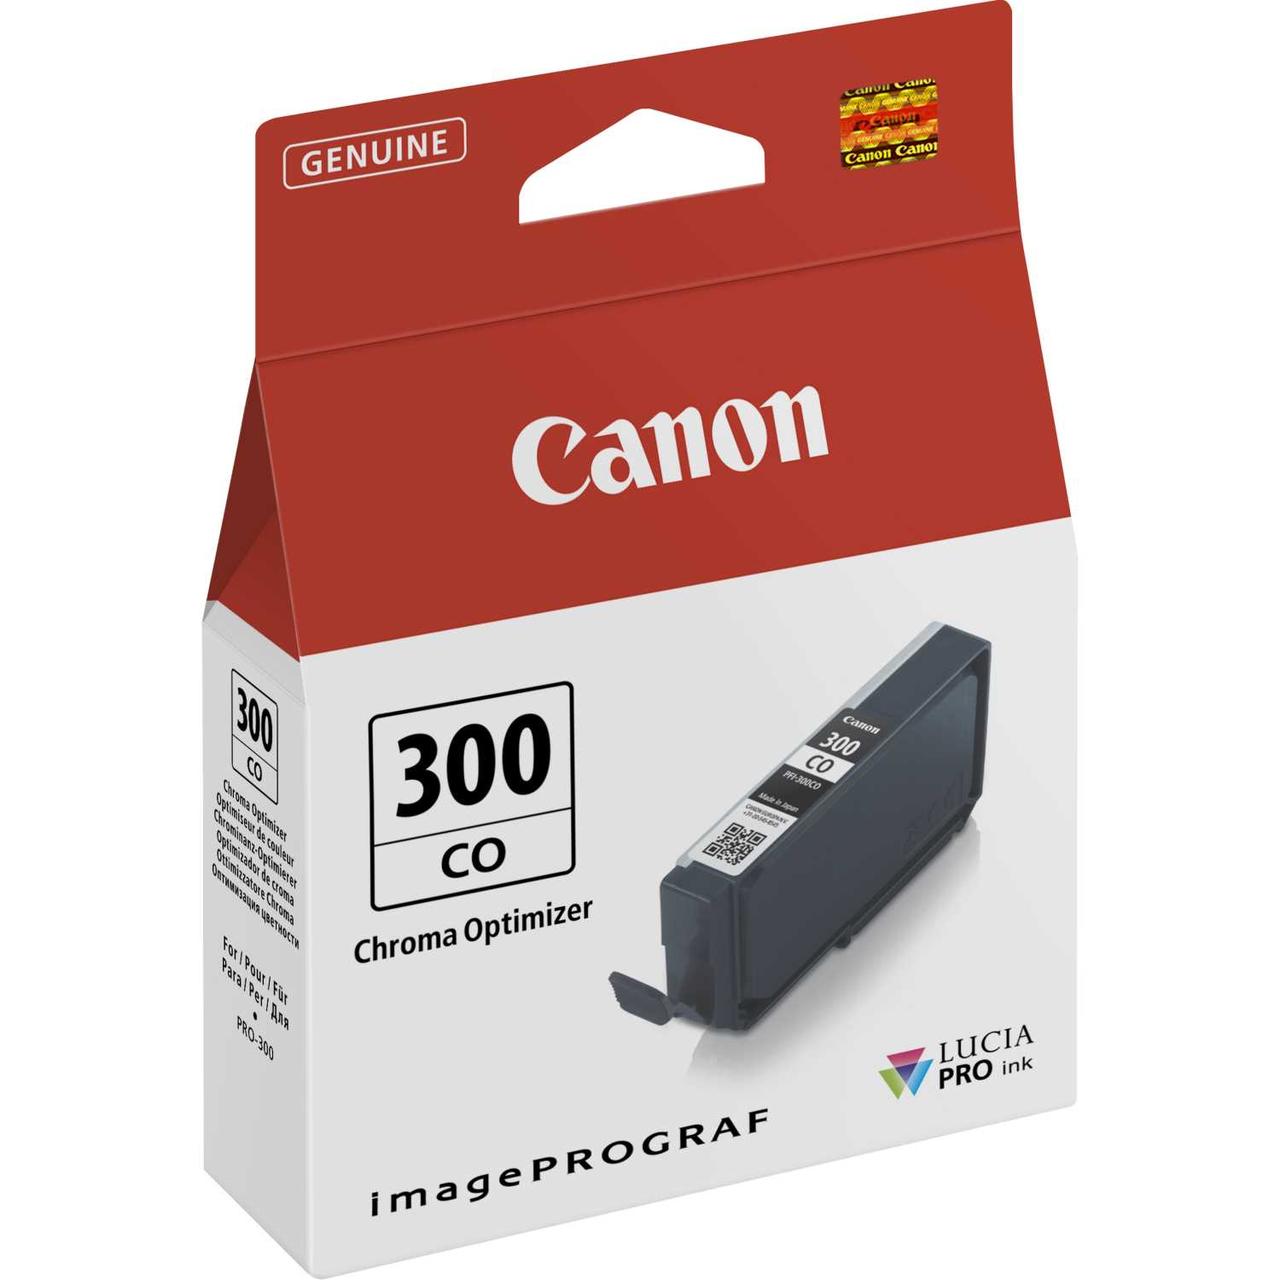 Картридж Canon LUCIA PRO Ink PFI-300 CO (clear)для imagePROGRAF PRO-300 4201C001